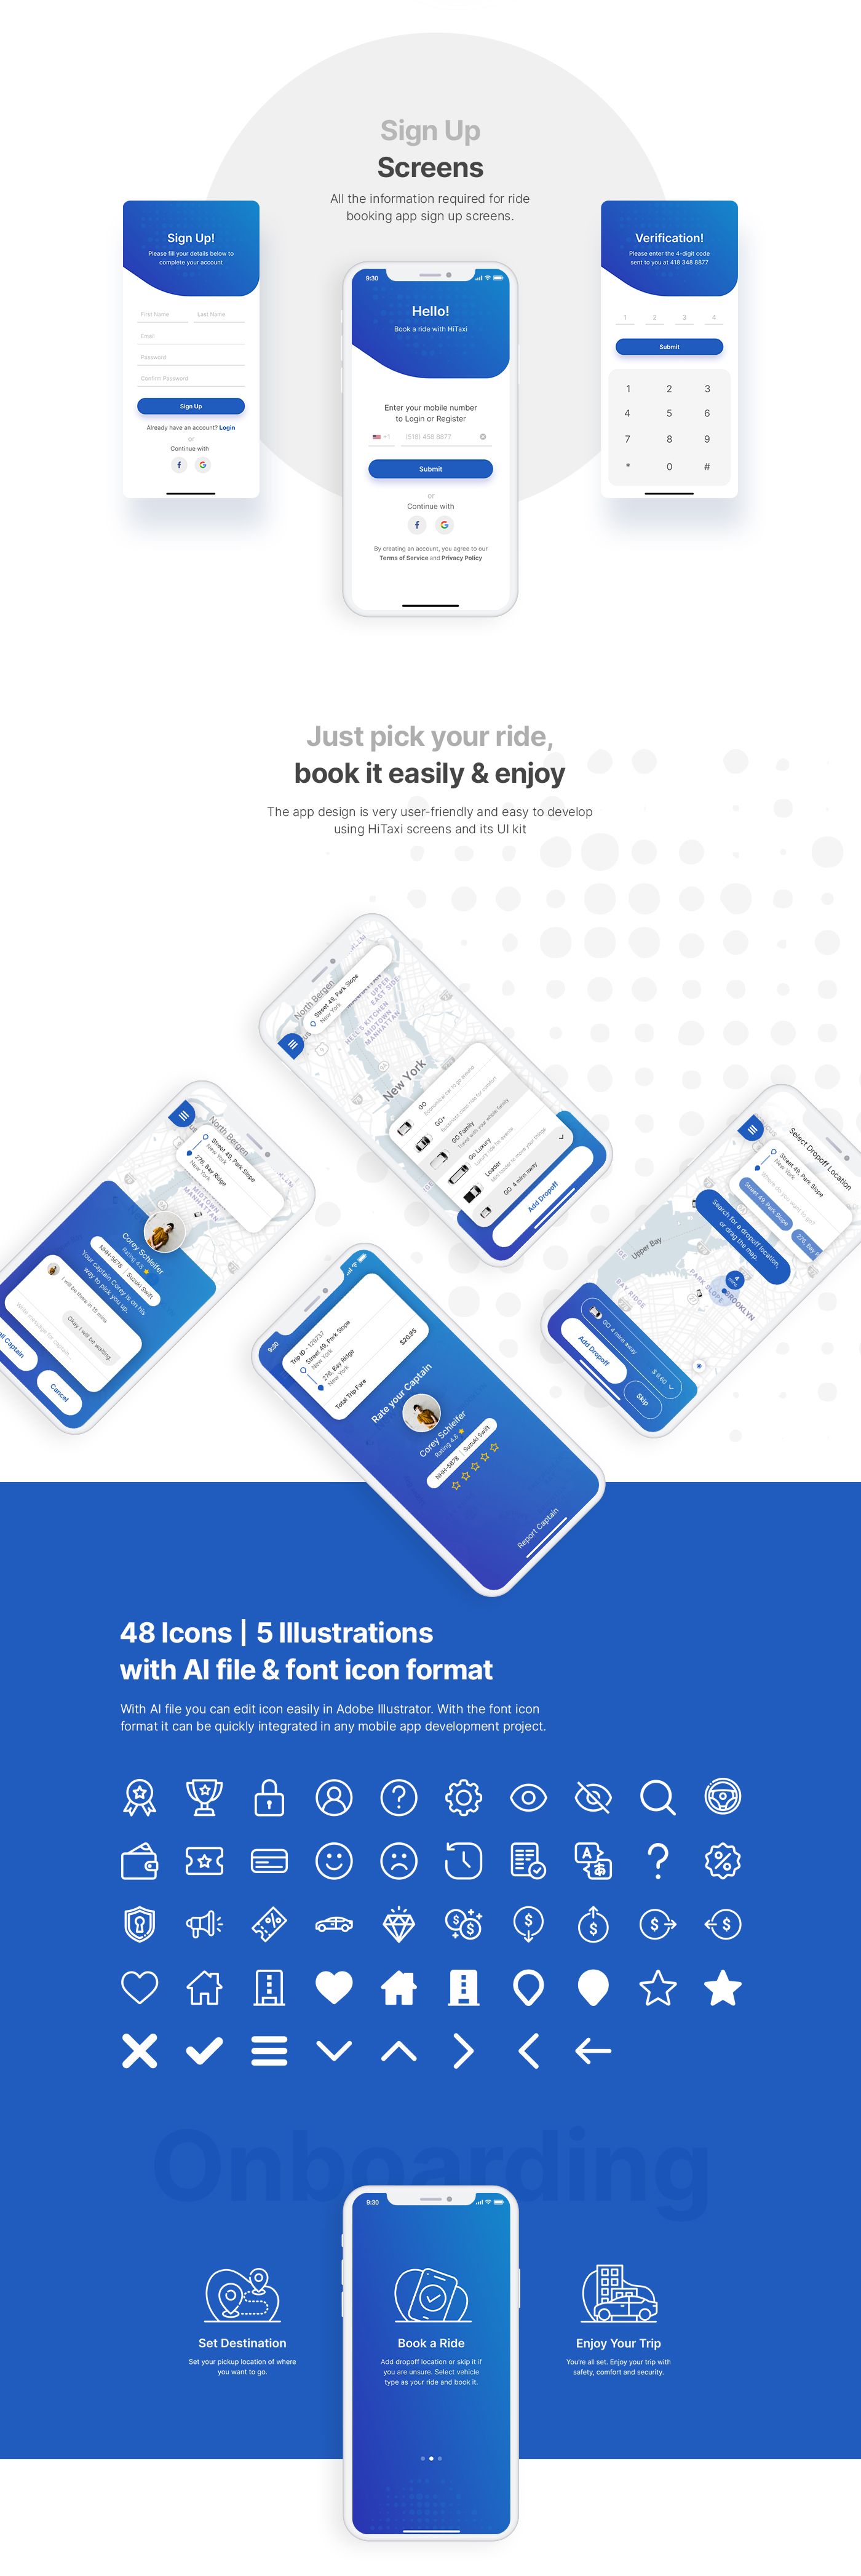 HiTaxi - Figma UI Kit for Mobile App - 2